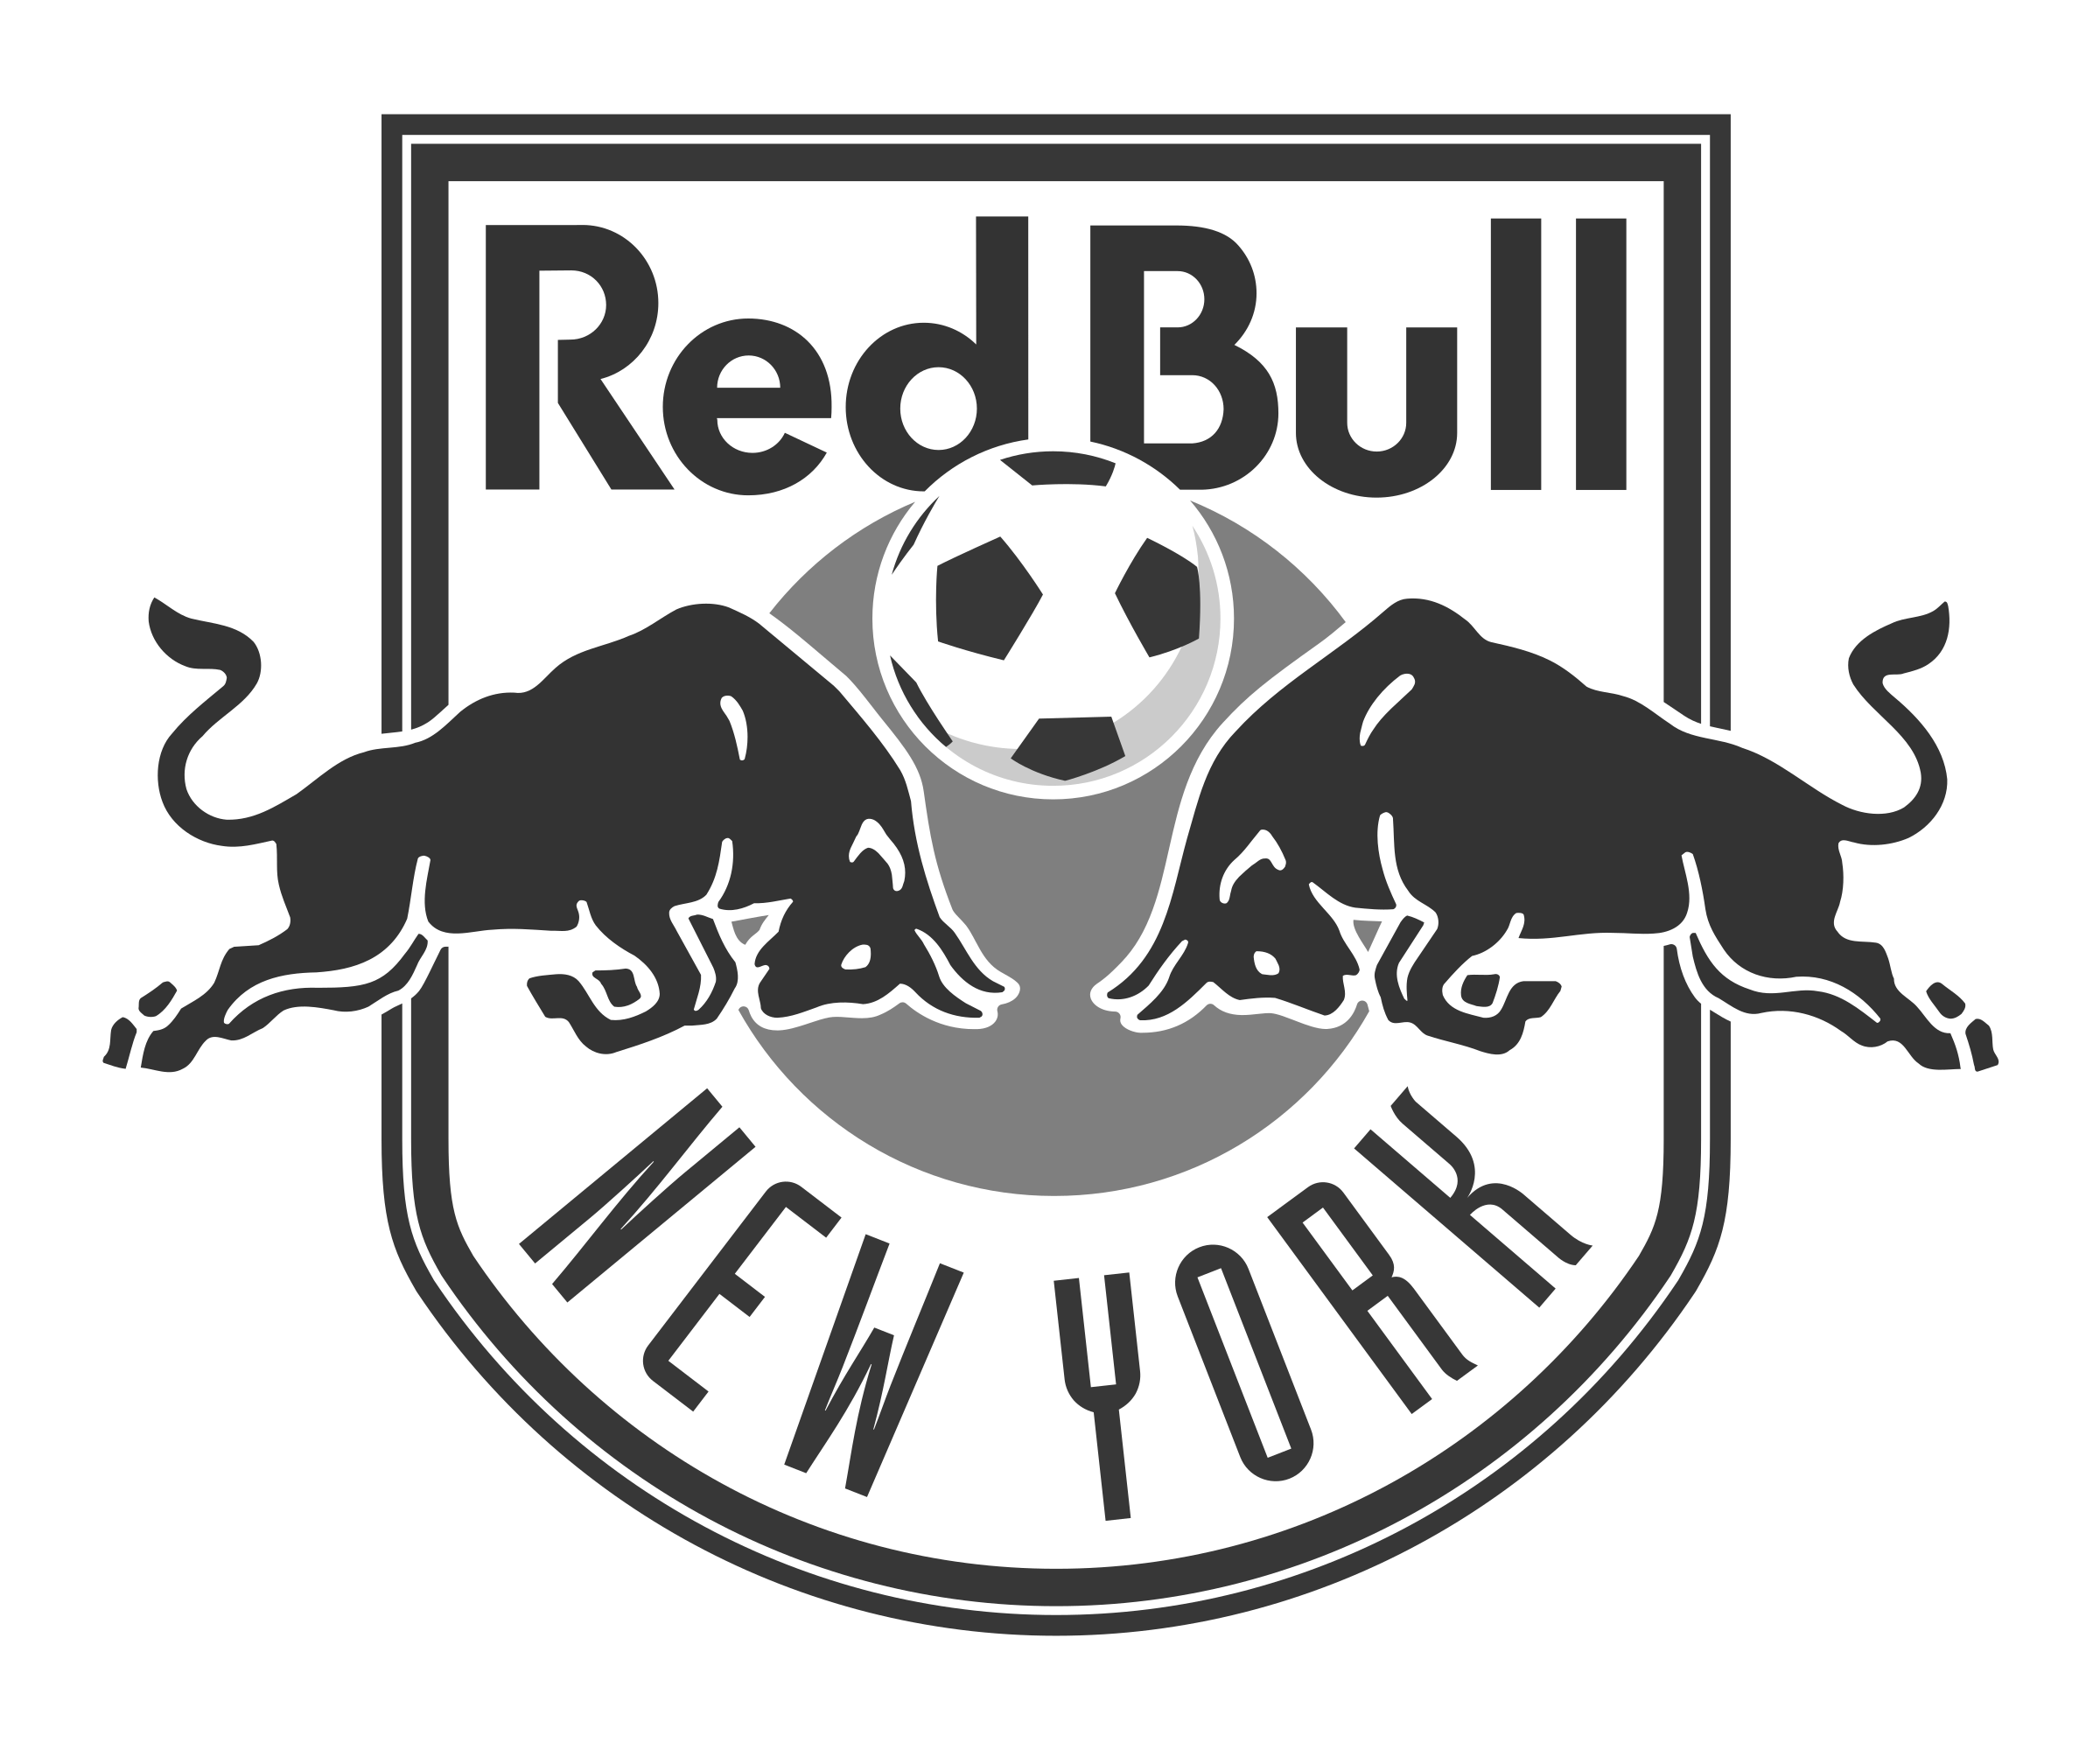 Black White and Red Bull Logo - New York Red Bulls Logo PNG Transparent & SVG Vector